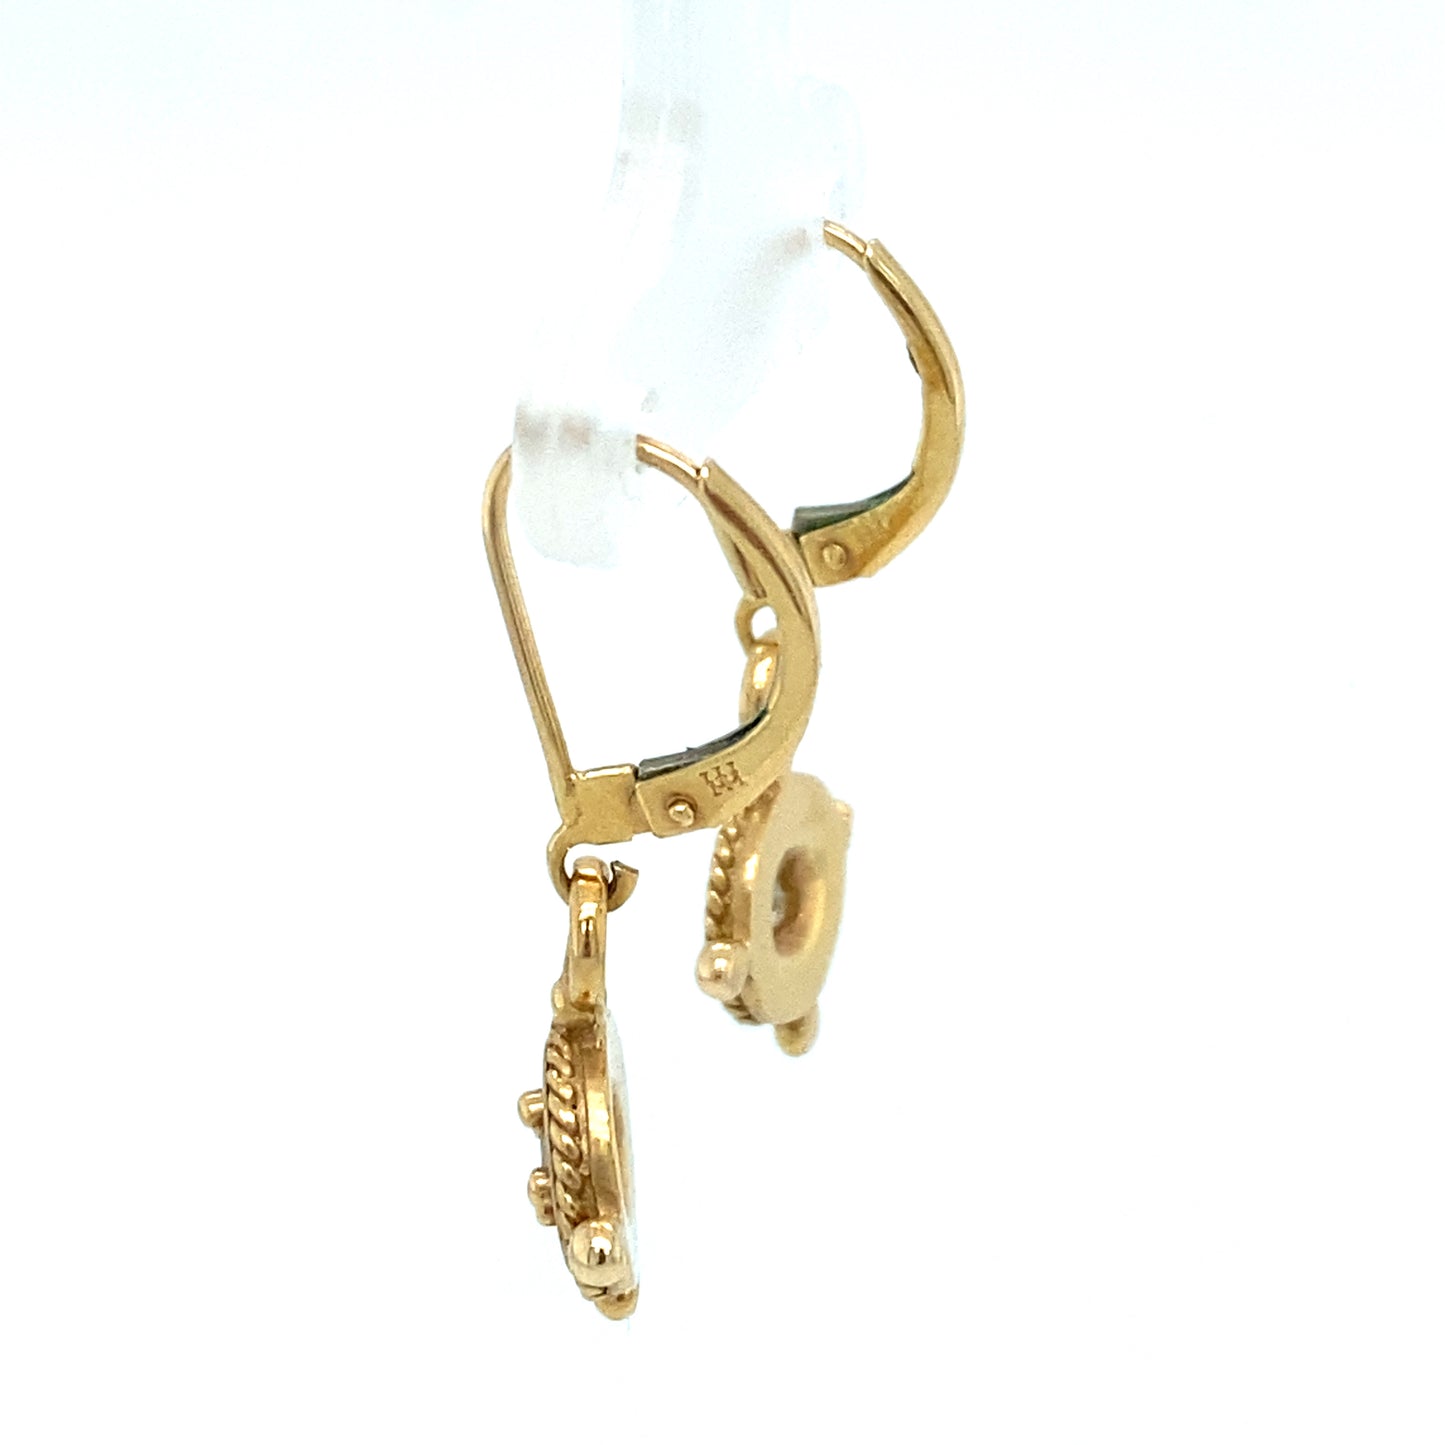 Circa 2000s Diamond Charm Dangle Earrings in 14K Gold